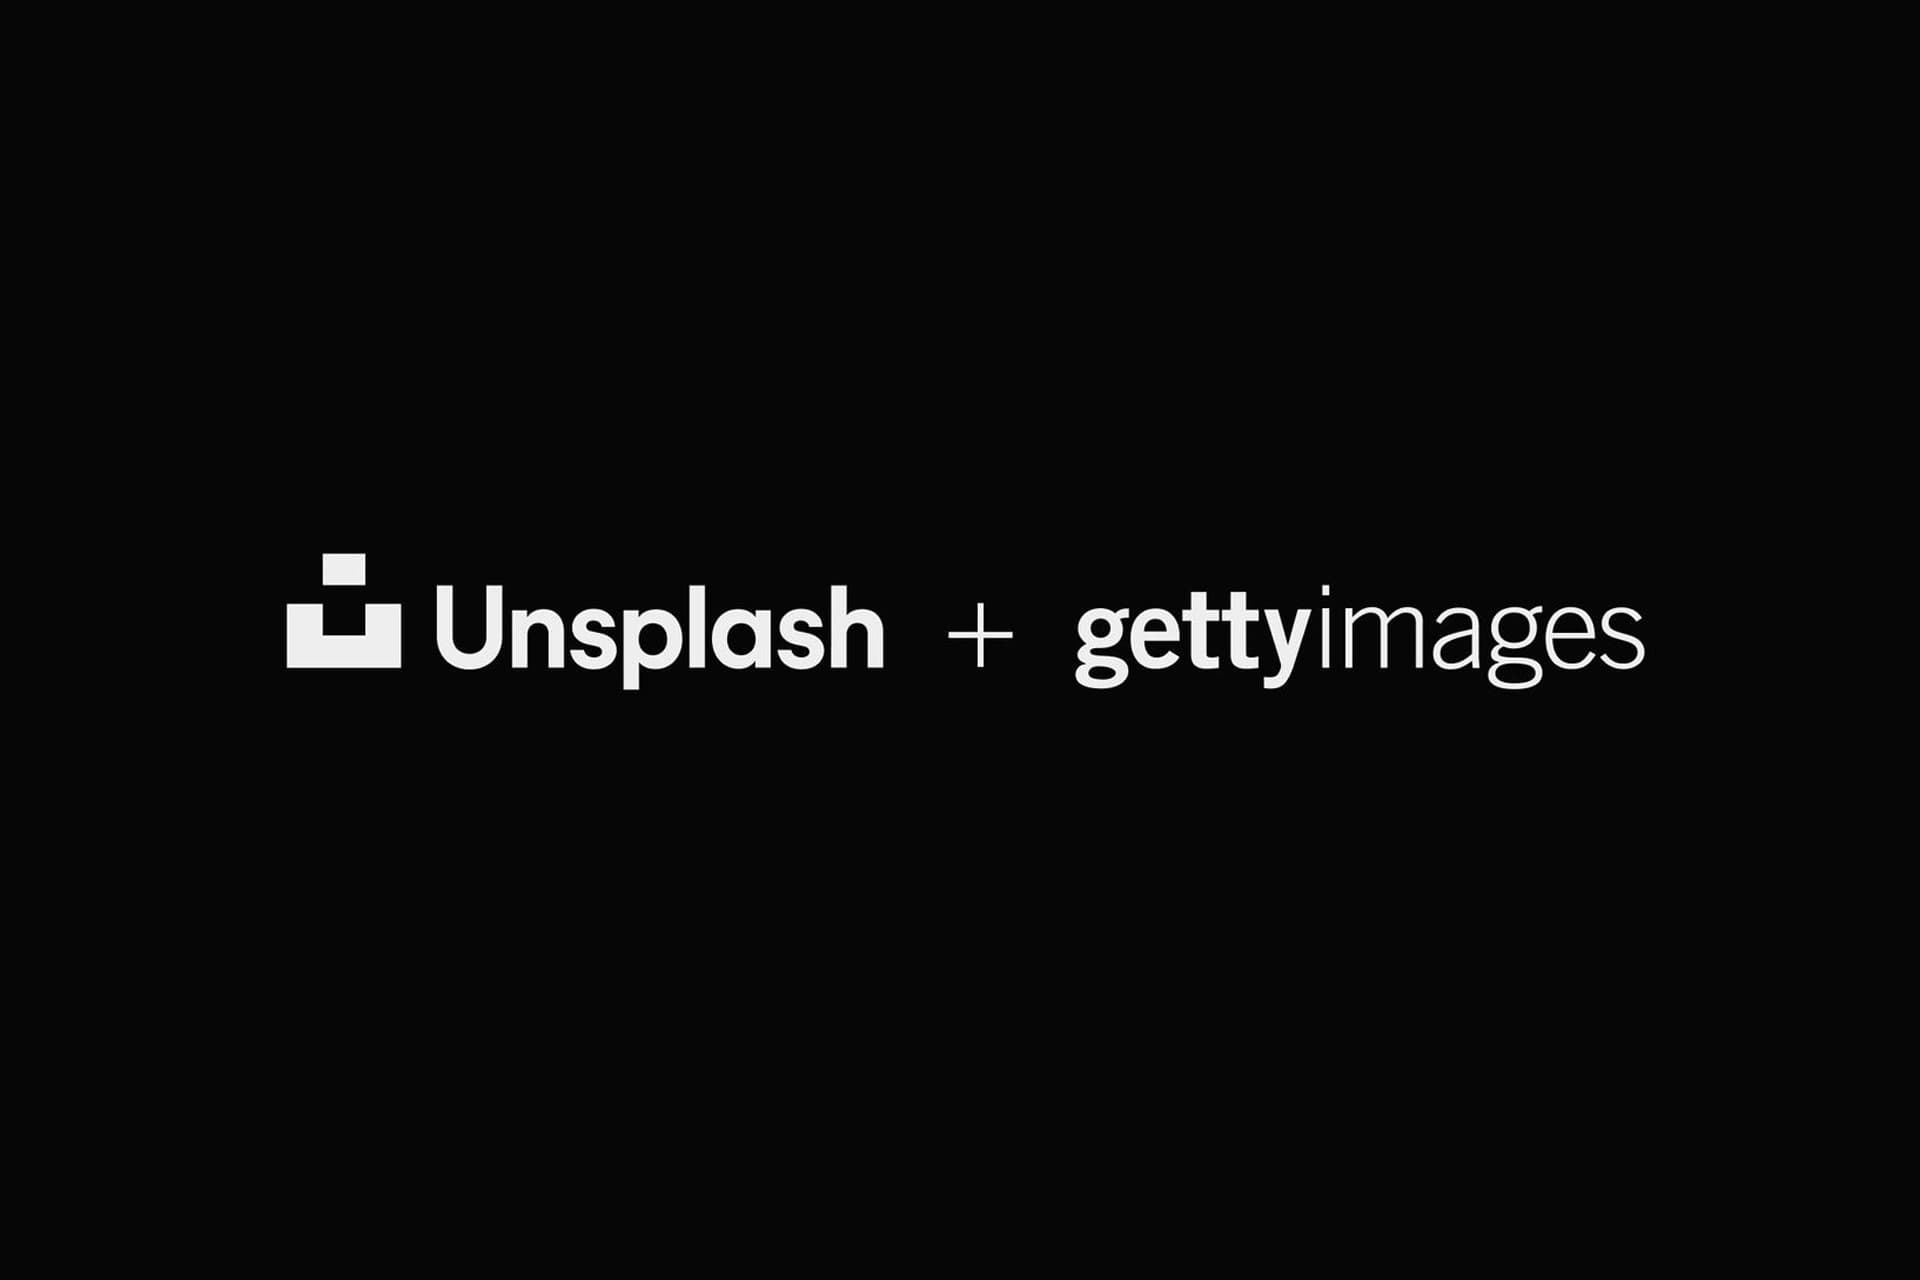 Unsplash - Getty Images 1